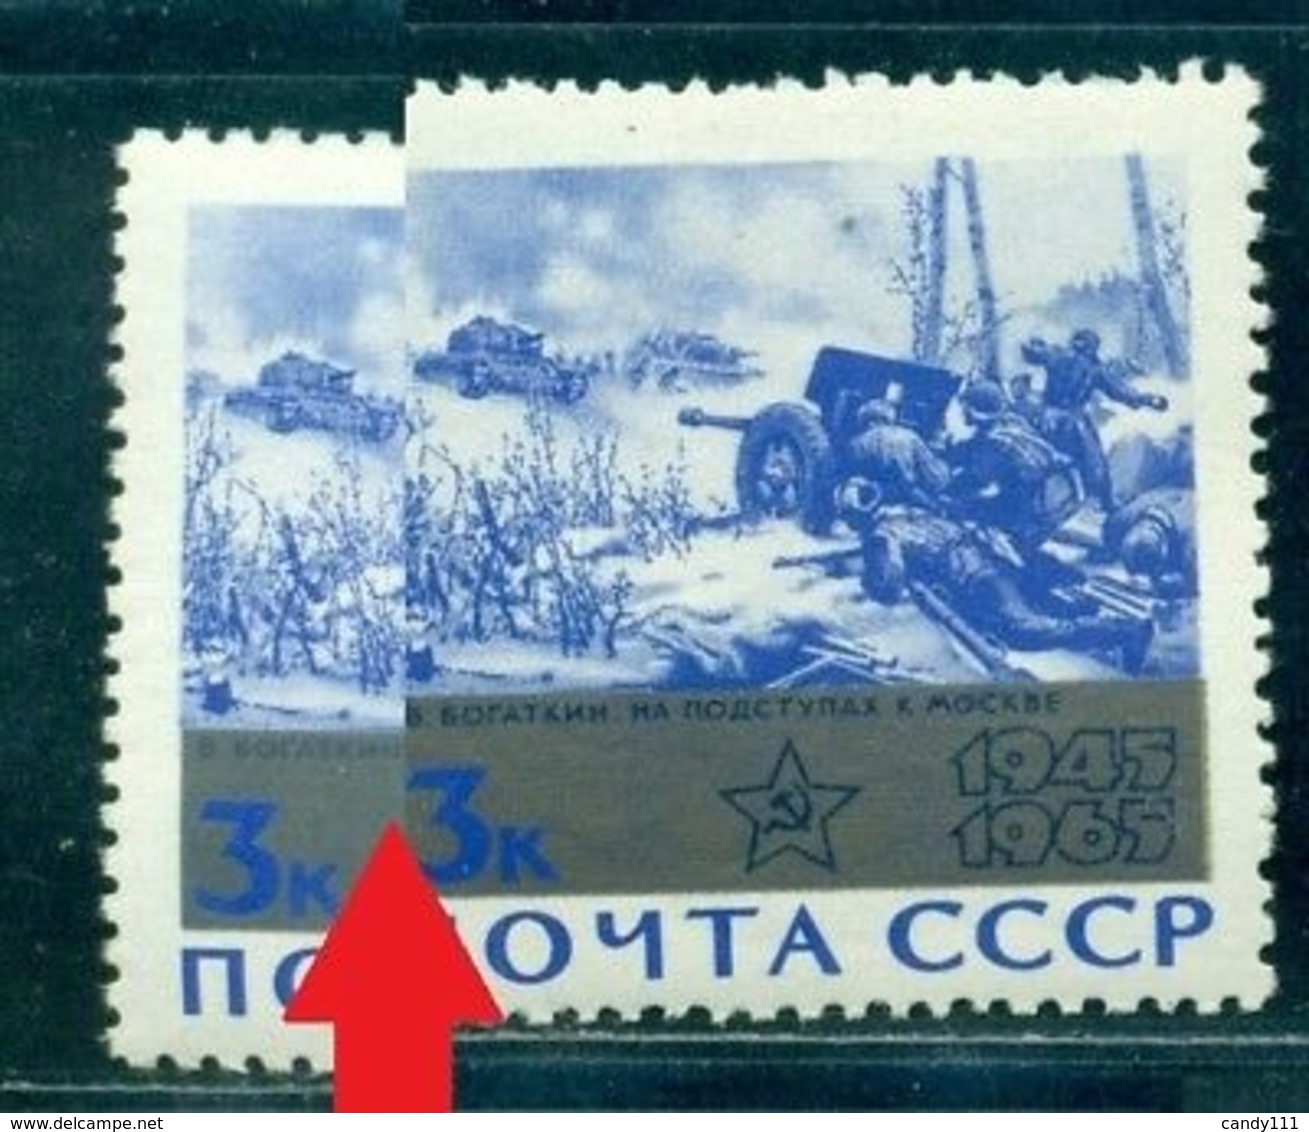 1965 Victory,20th Ann,On Approaches To Moscow/Bogatkin,Russia,3053ab,MNH,variety - Variétés & Curiosités